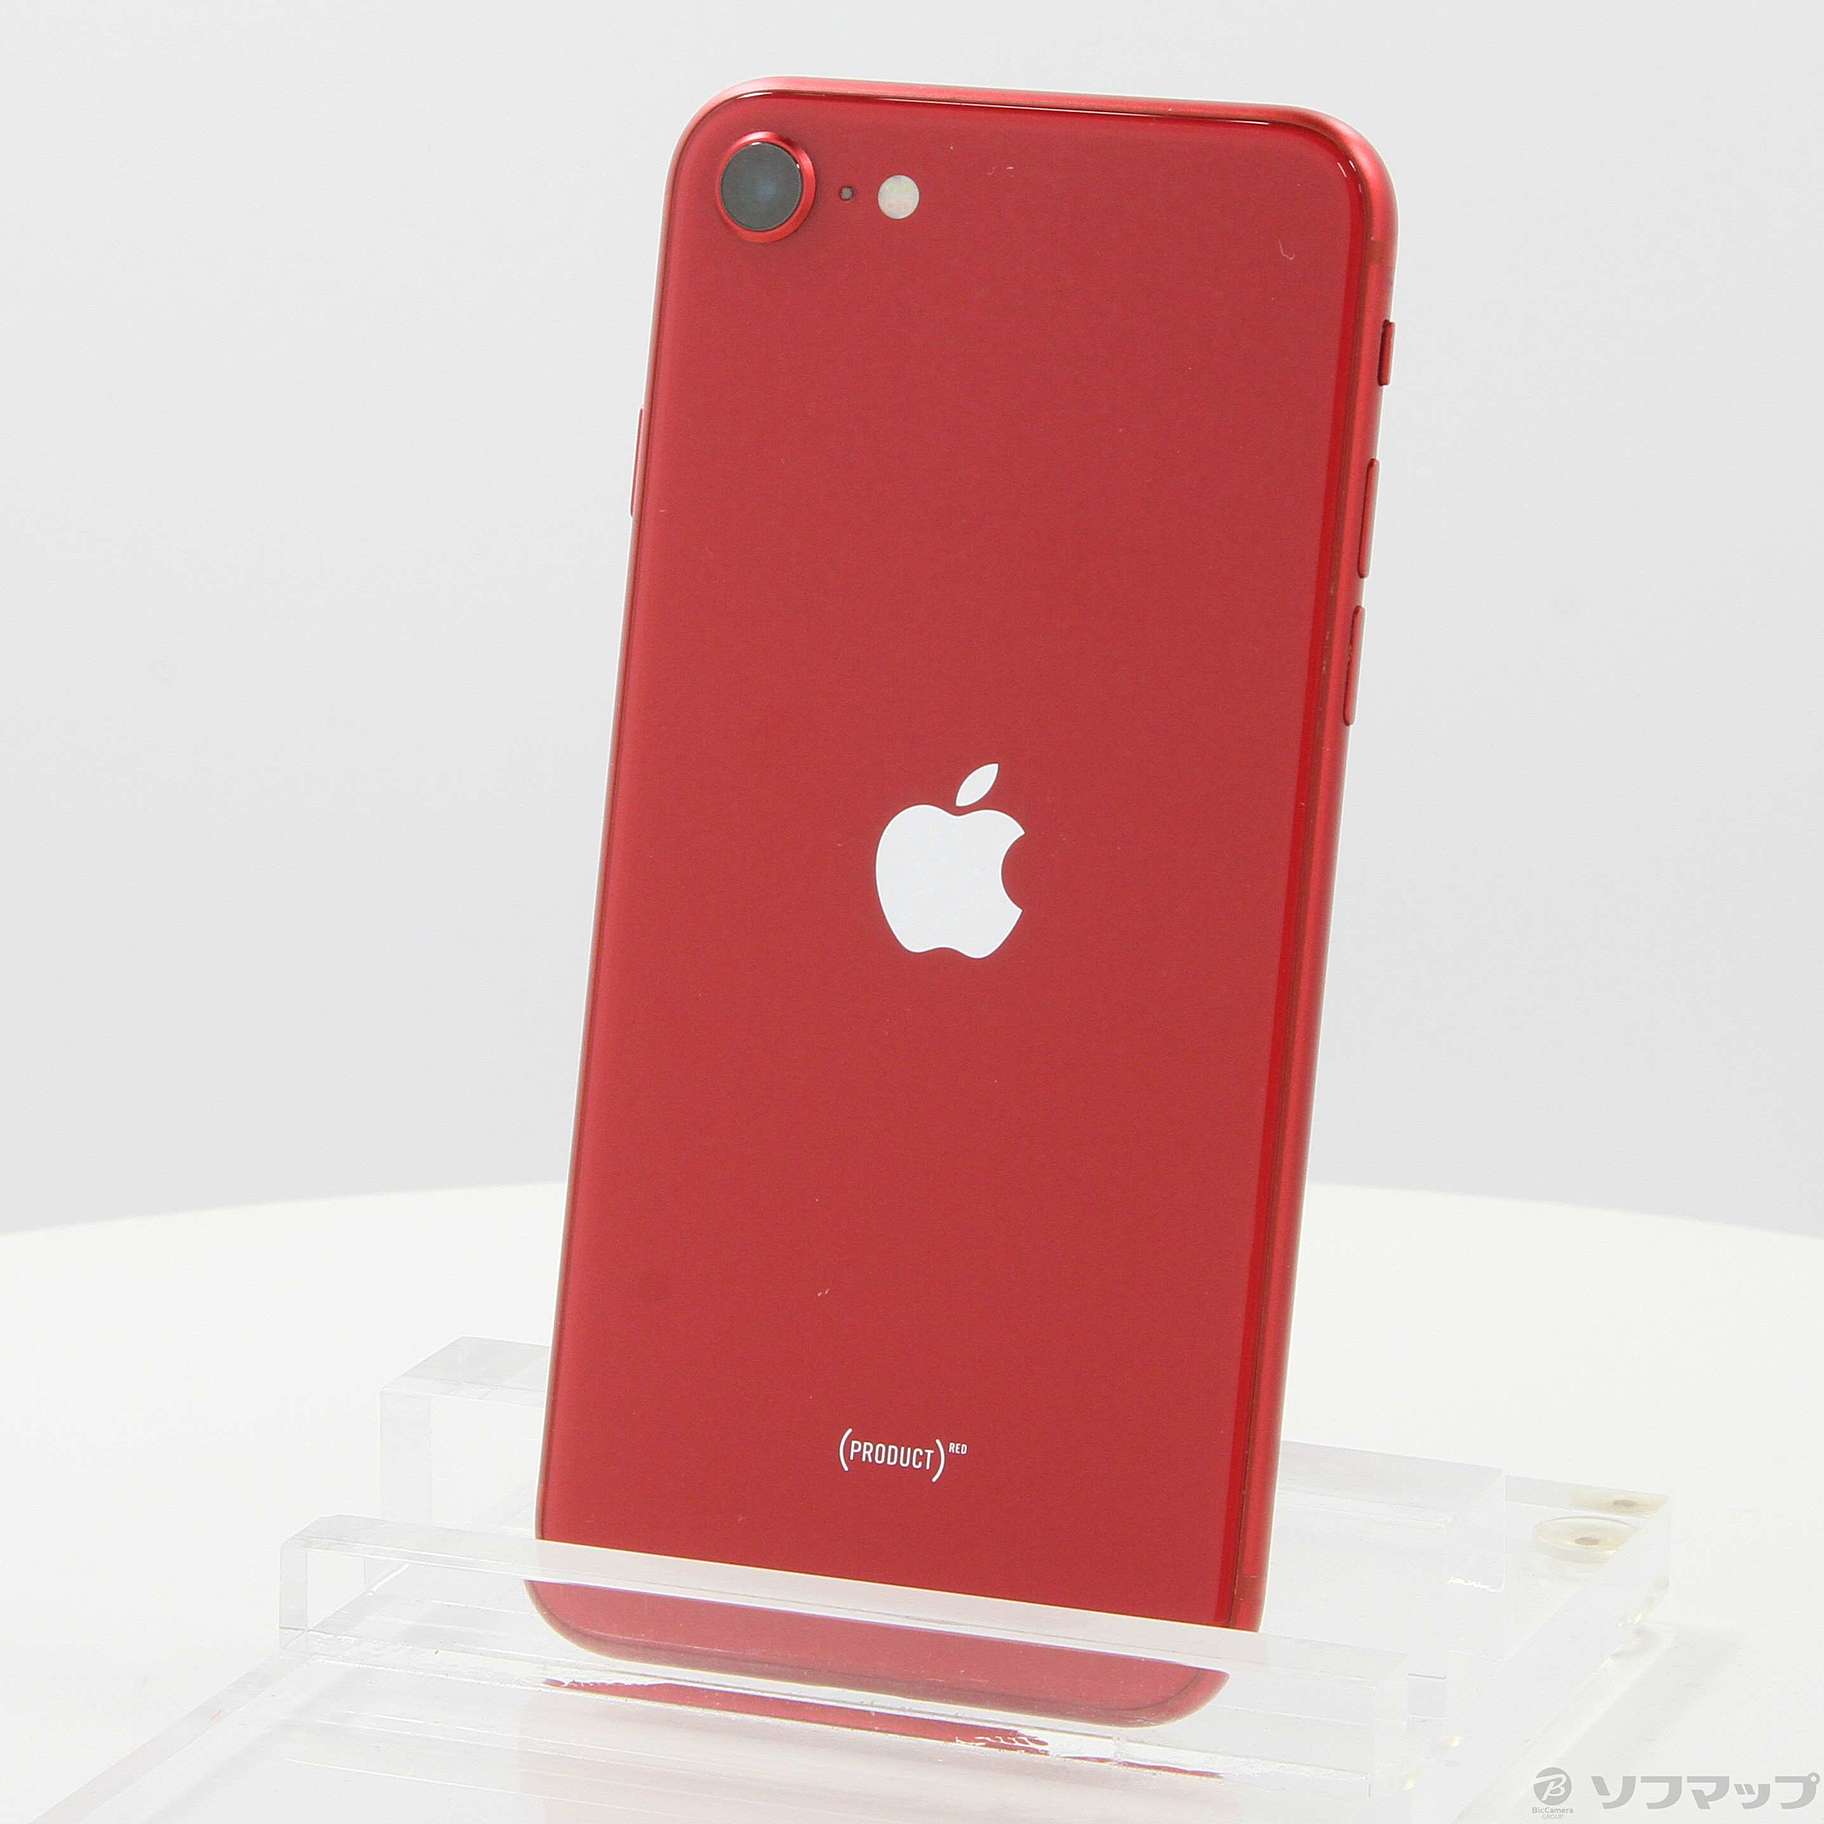 iPhone SE(第二世代)product Red 128GB 未使用品